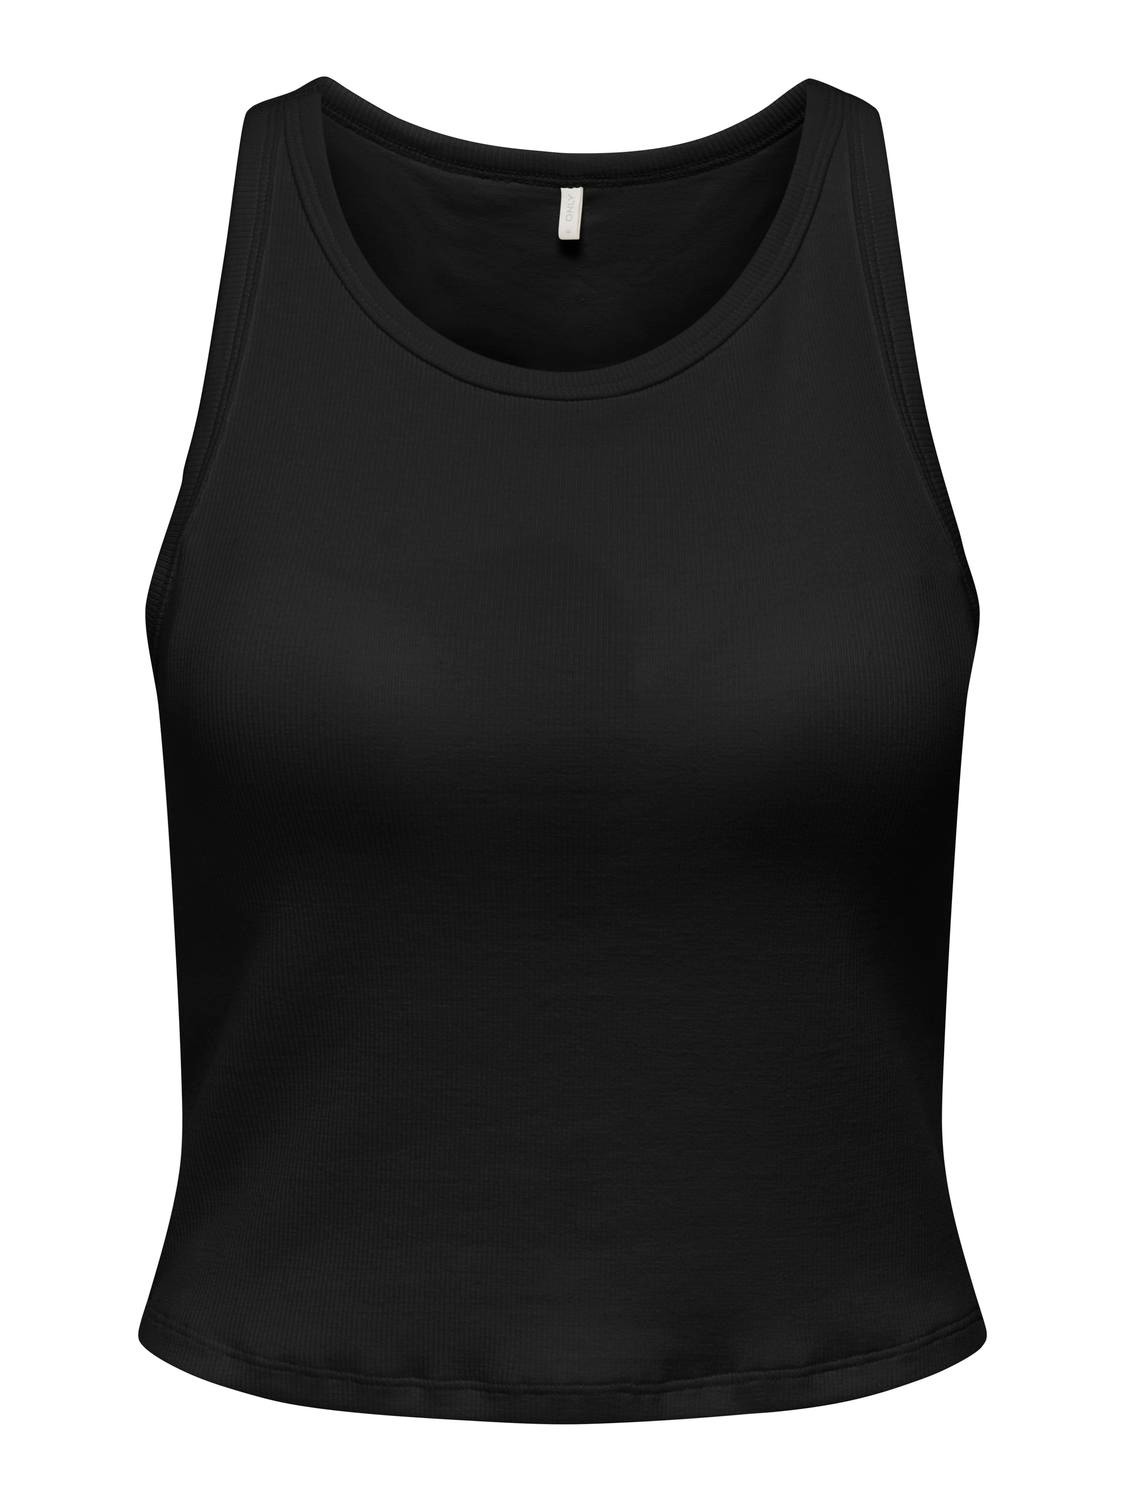 ONLY Cropped sleevesless top -Black - 15319477